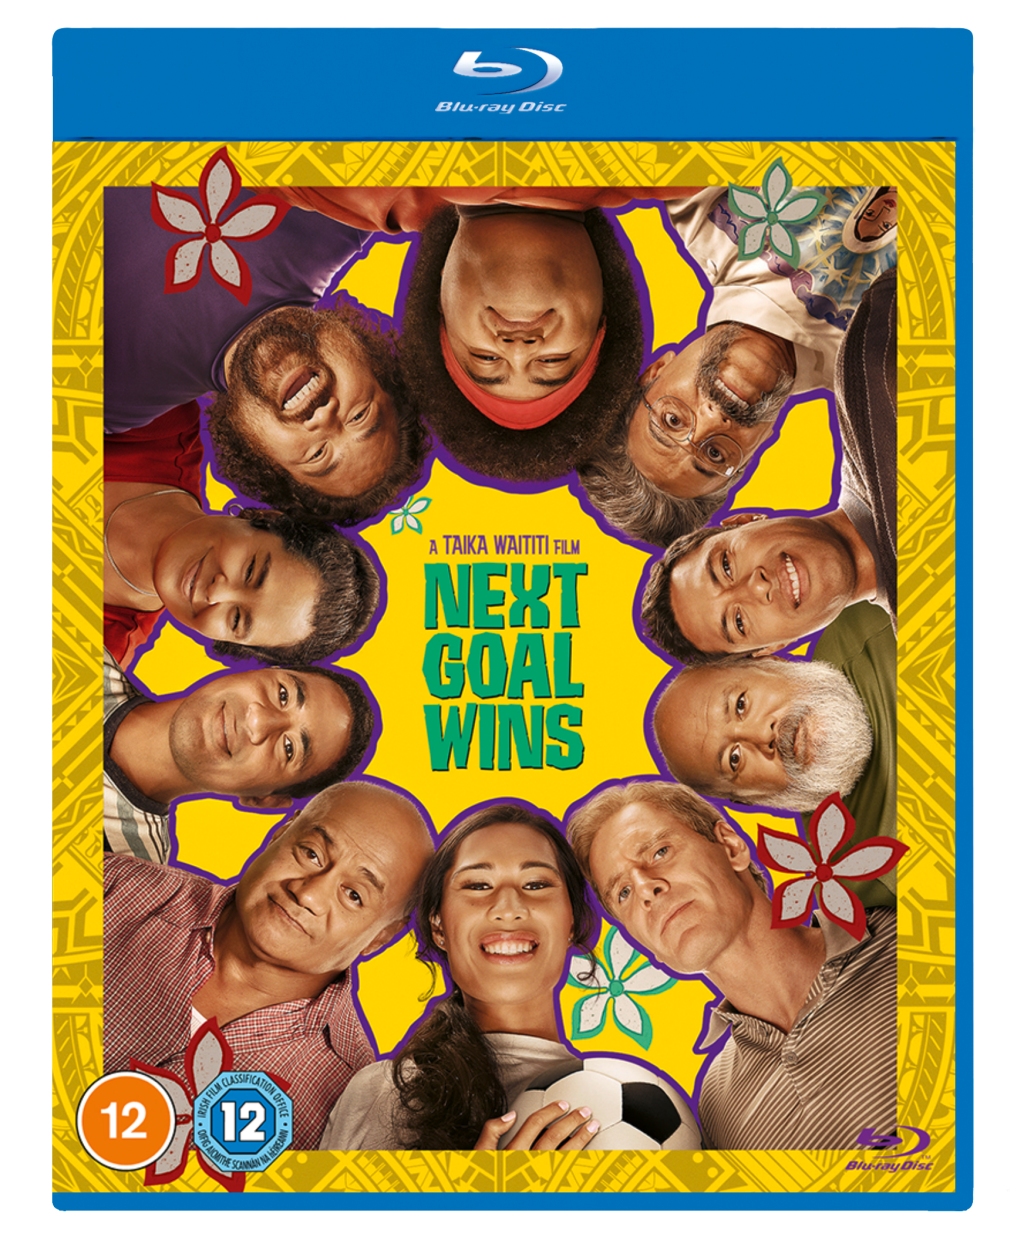 Win Next Goal Wins, starring Michael Fassbender, on Blu-ray!